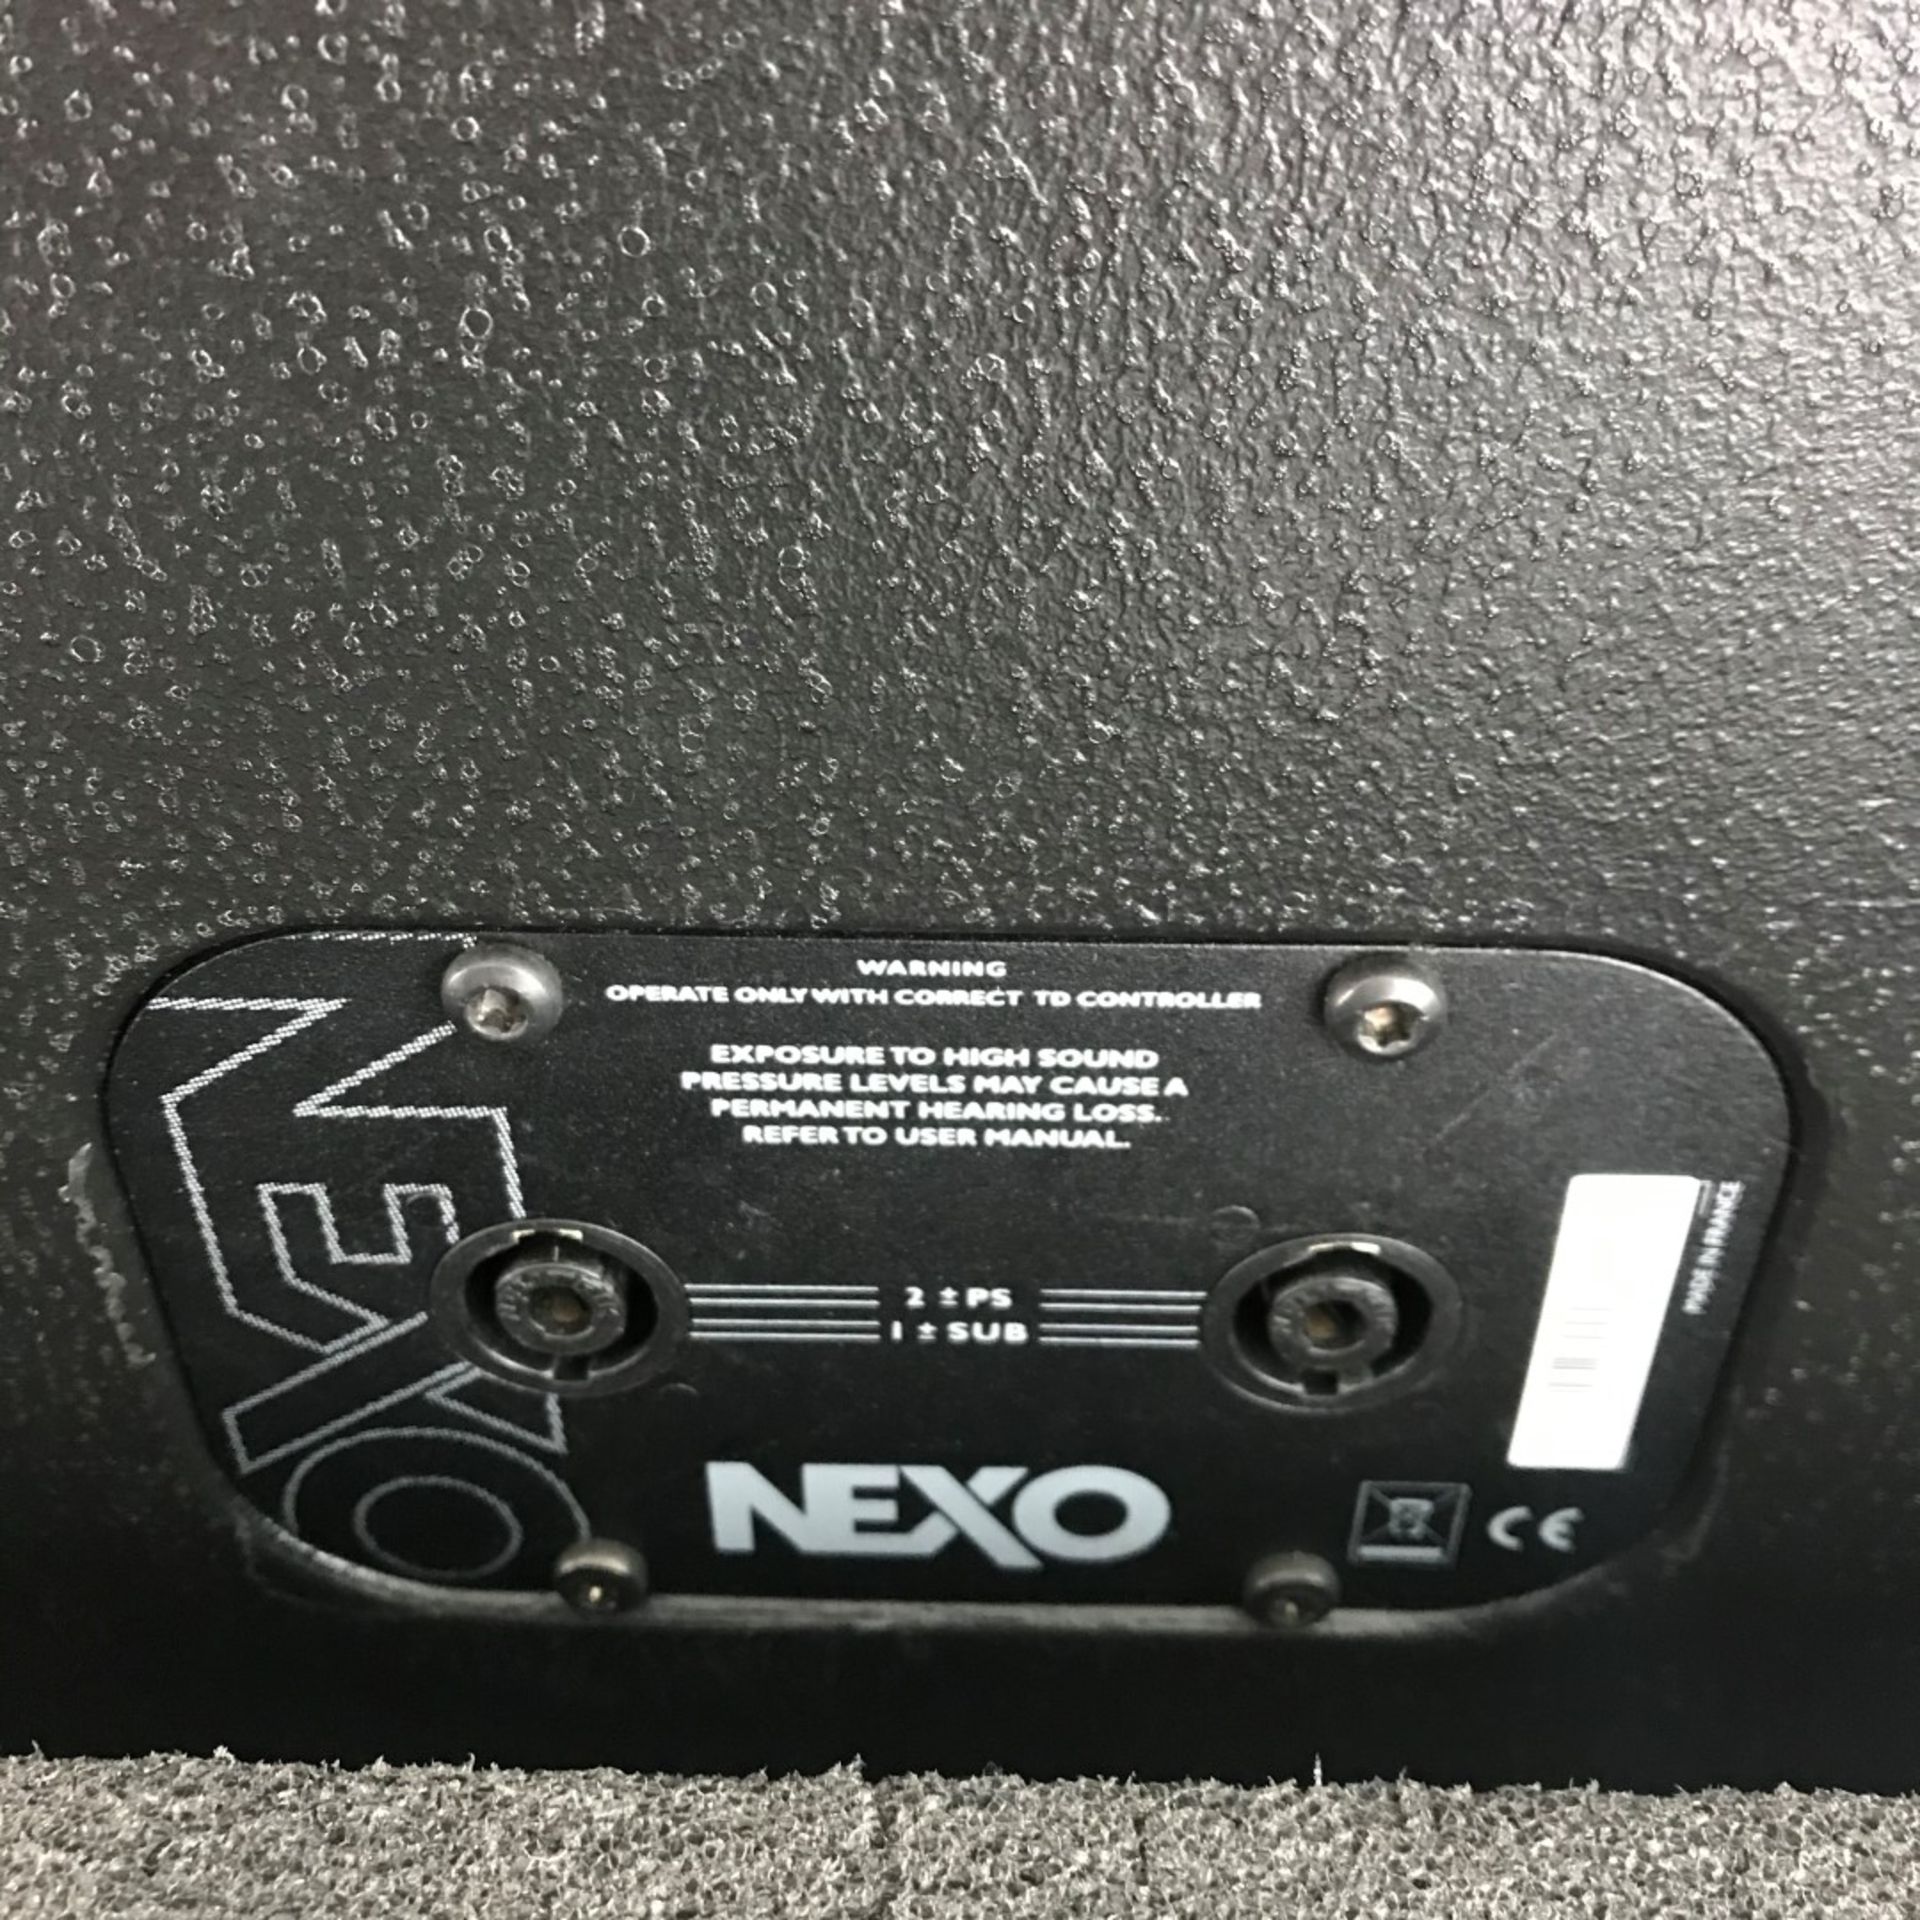 1 x Nexo LS1800 Bass Bin Speaker In Flight Case - Ref: 117 - CL581 - Location: Altrincham WA14 - Image 2 of 2